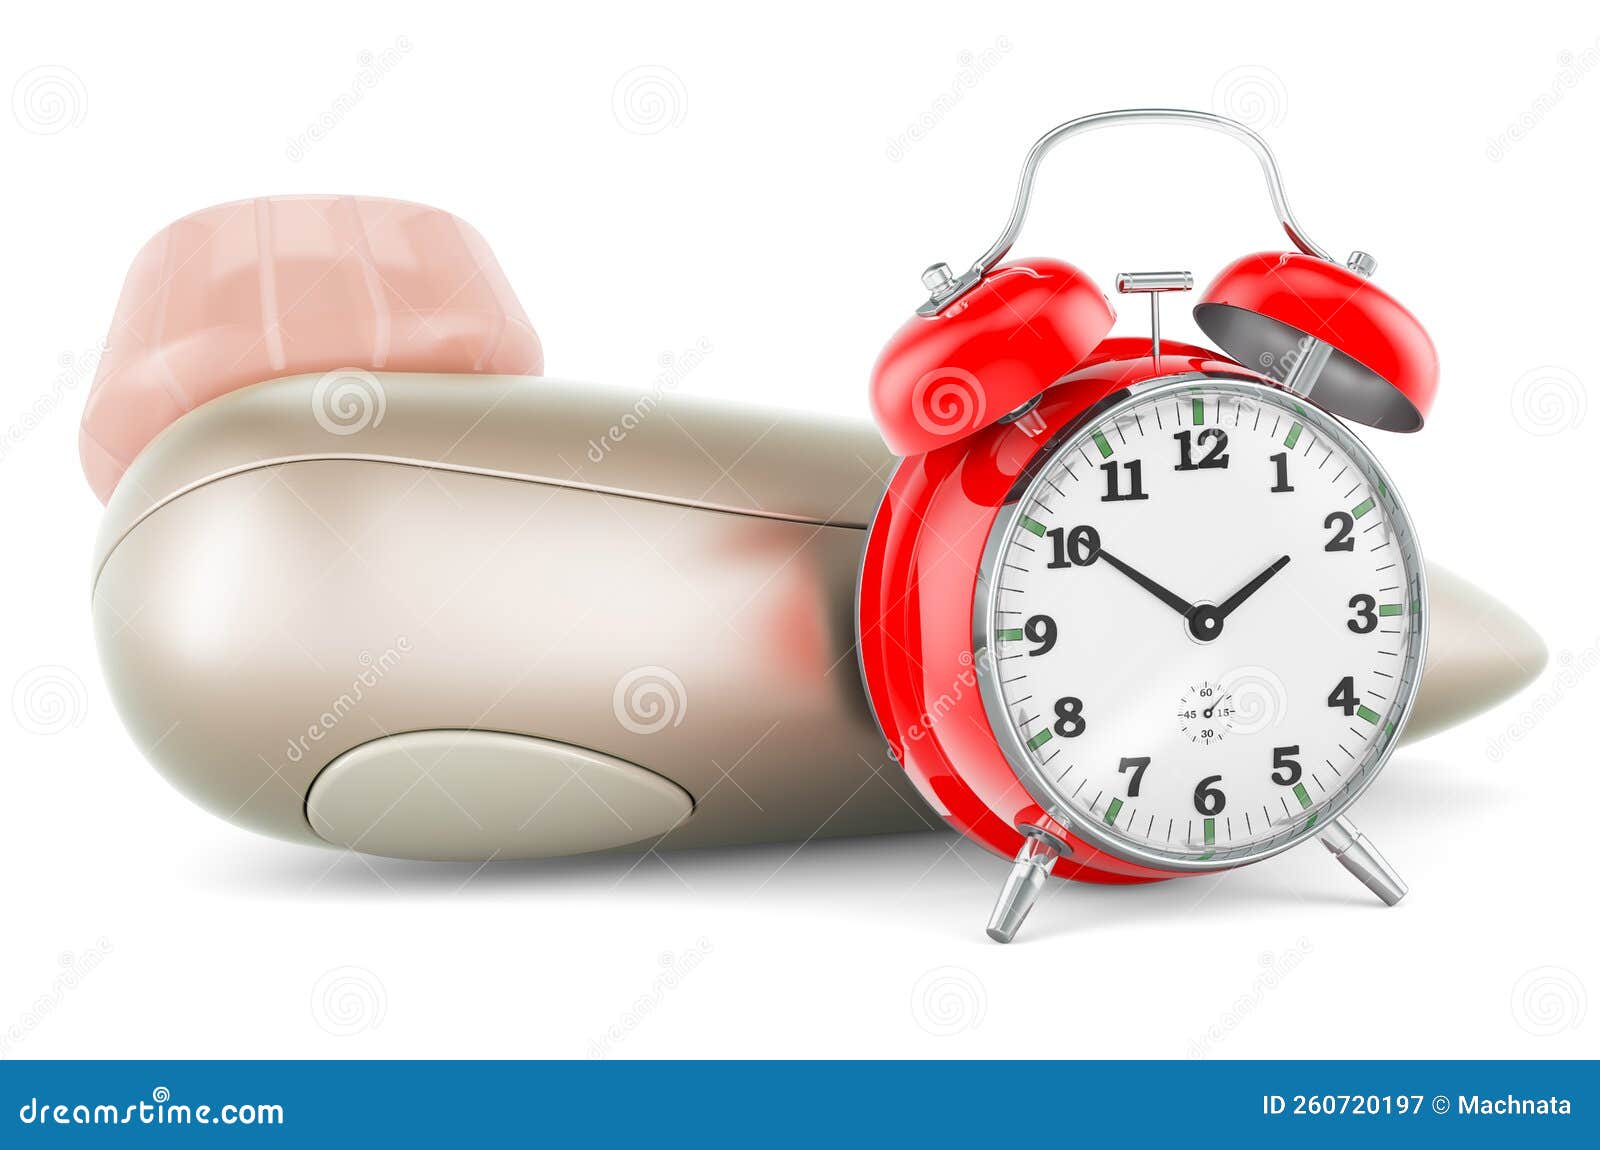 clit o clock alarm